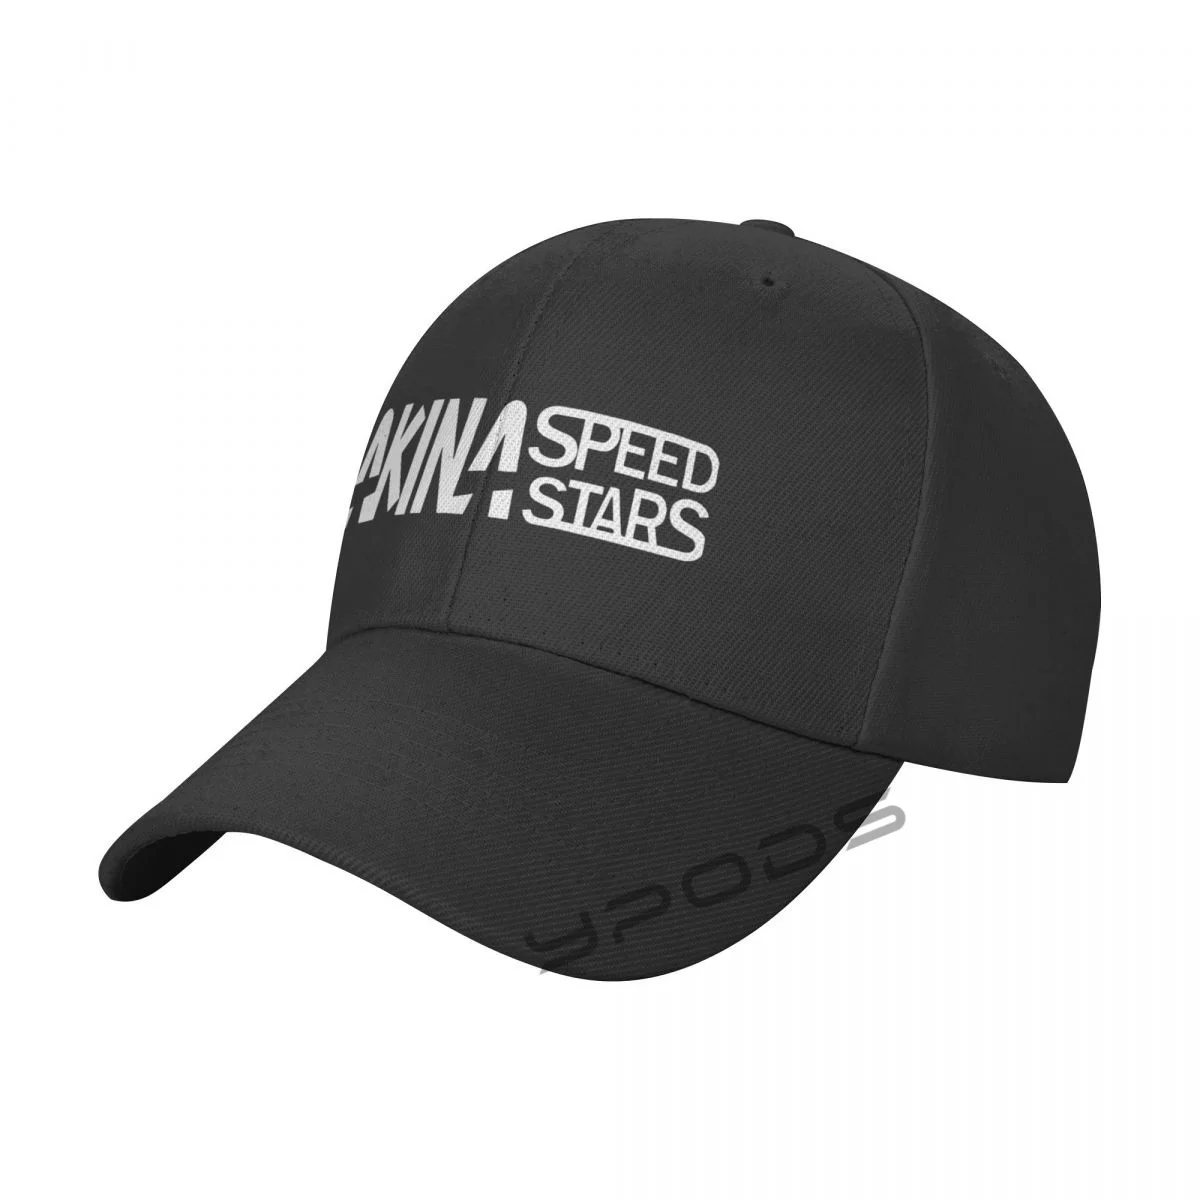 

Akina Speed Stars New Baseball Caps for Men Cap Women Hat Snapback Casual Cap Casquette Hats